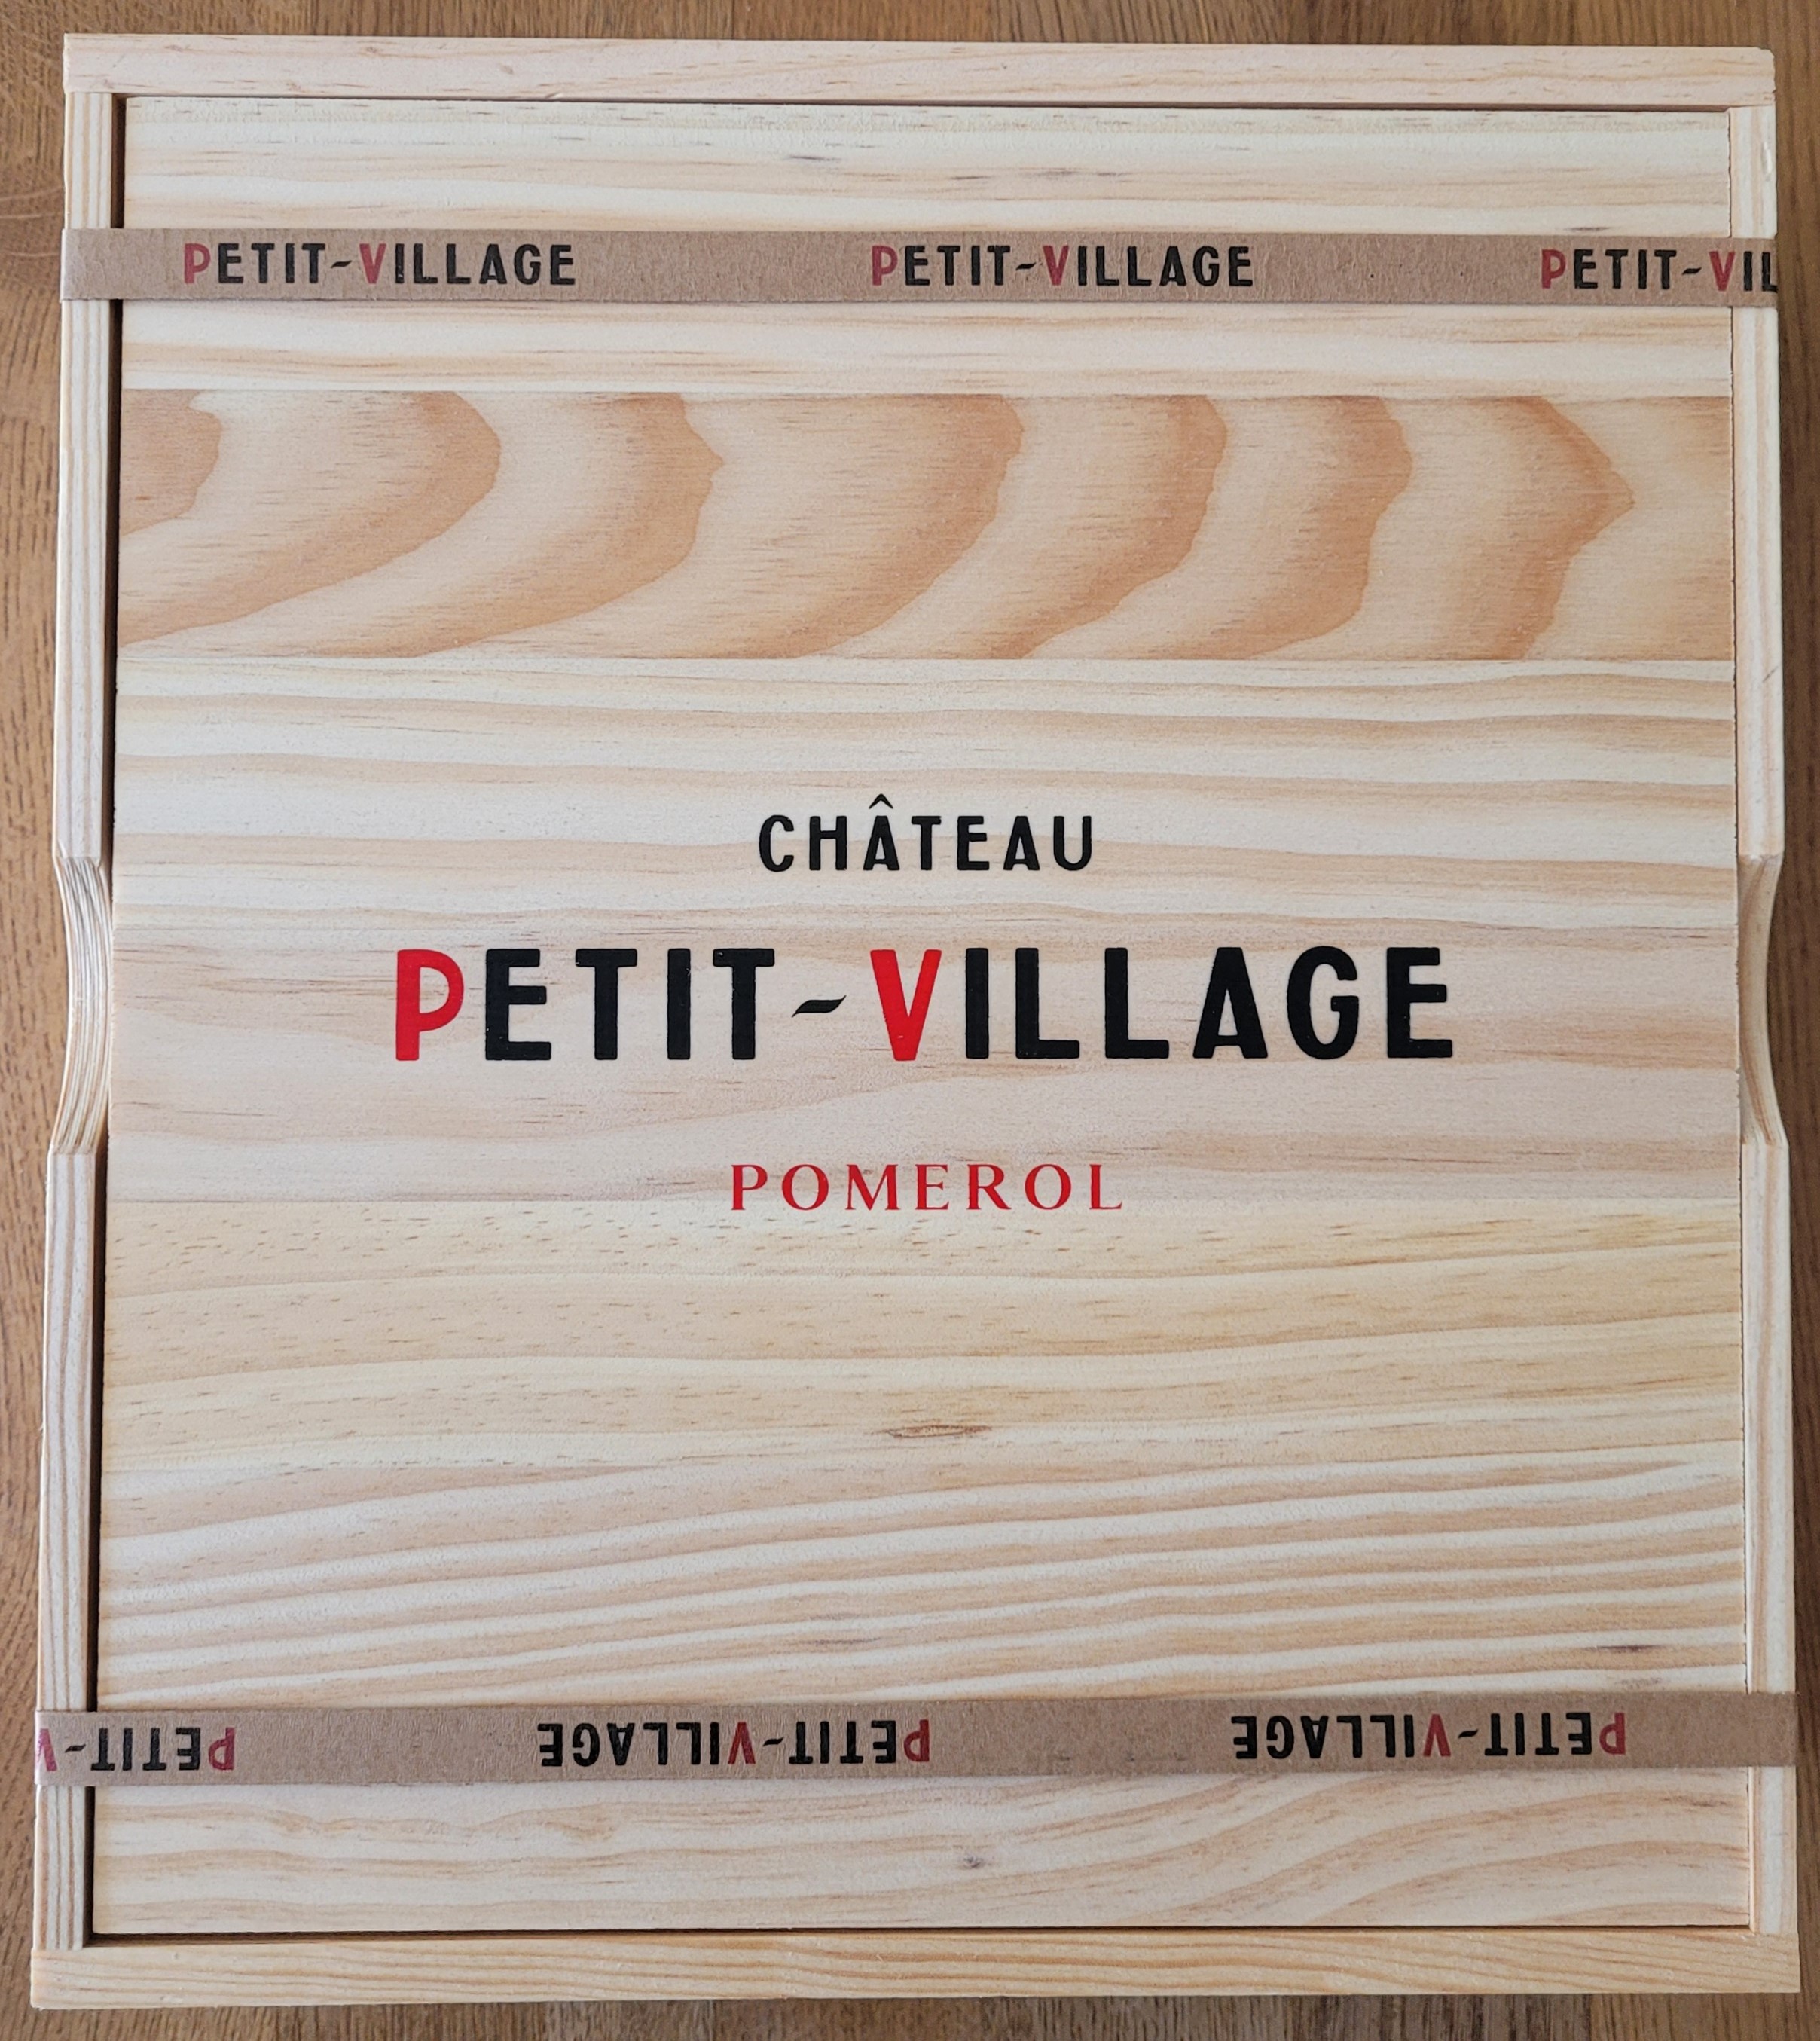 Château Petit Village 2020